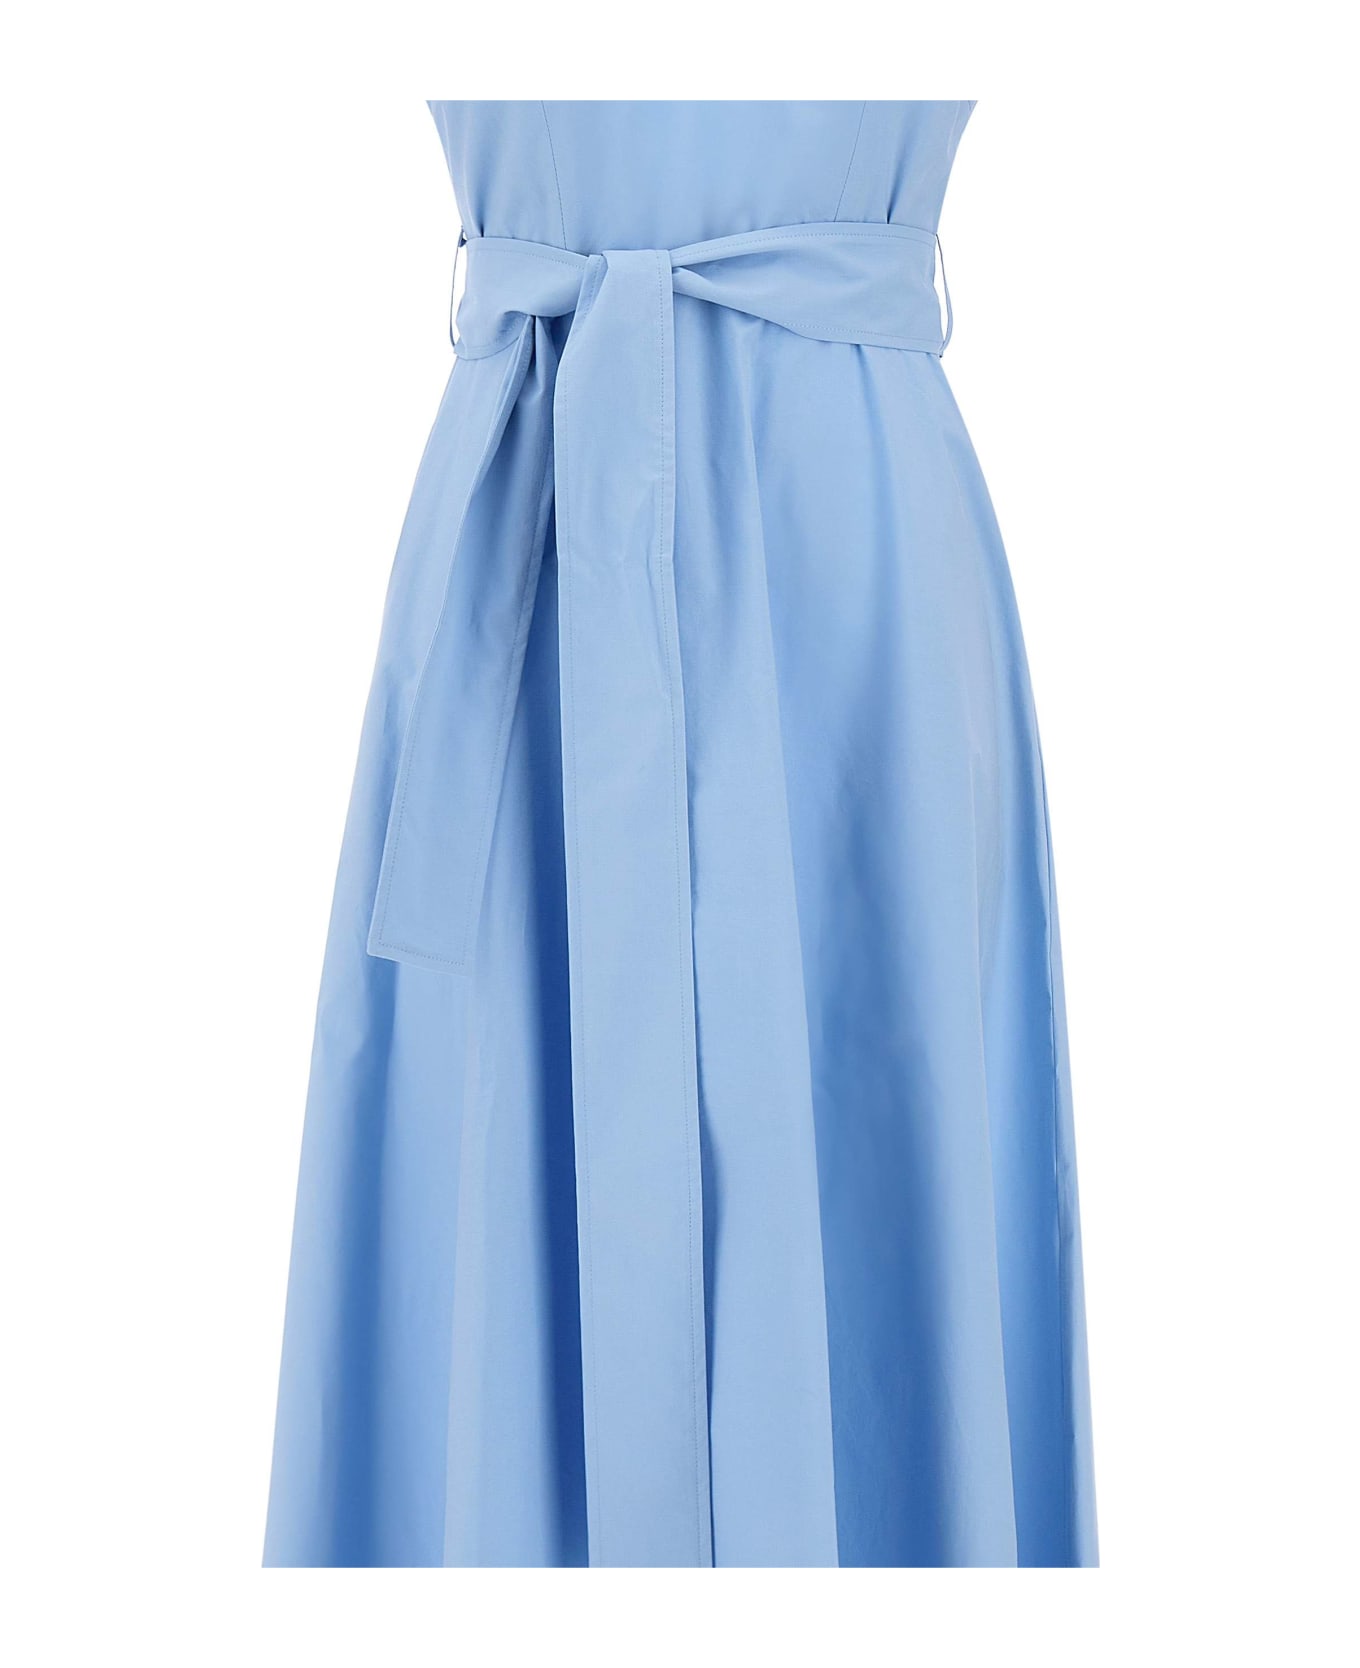 Parosh 'canyox24' Cotton Dress - Light Blue Dust